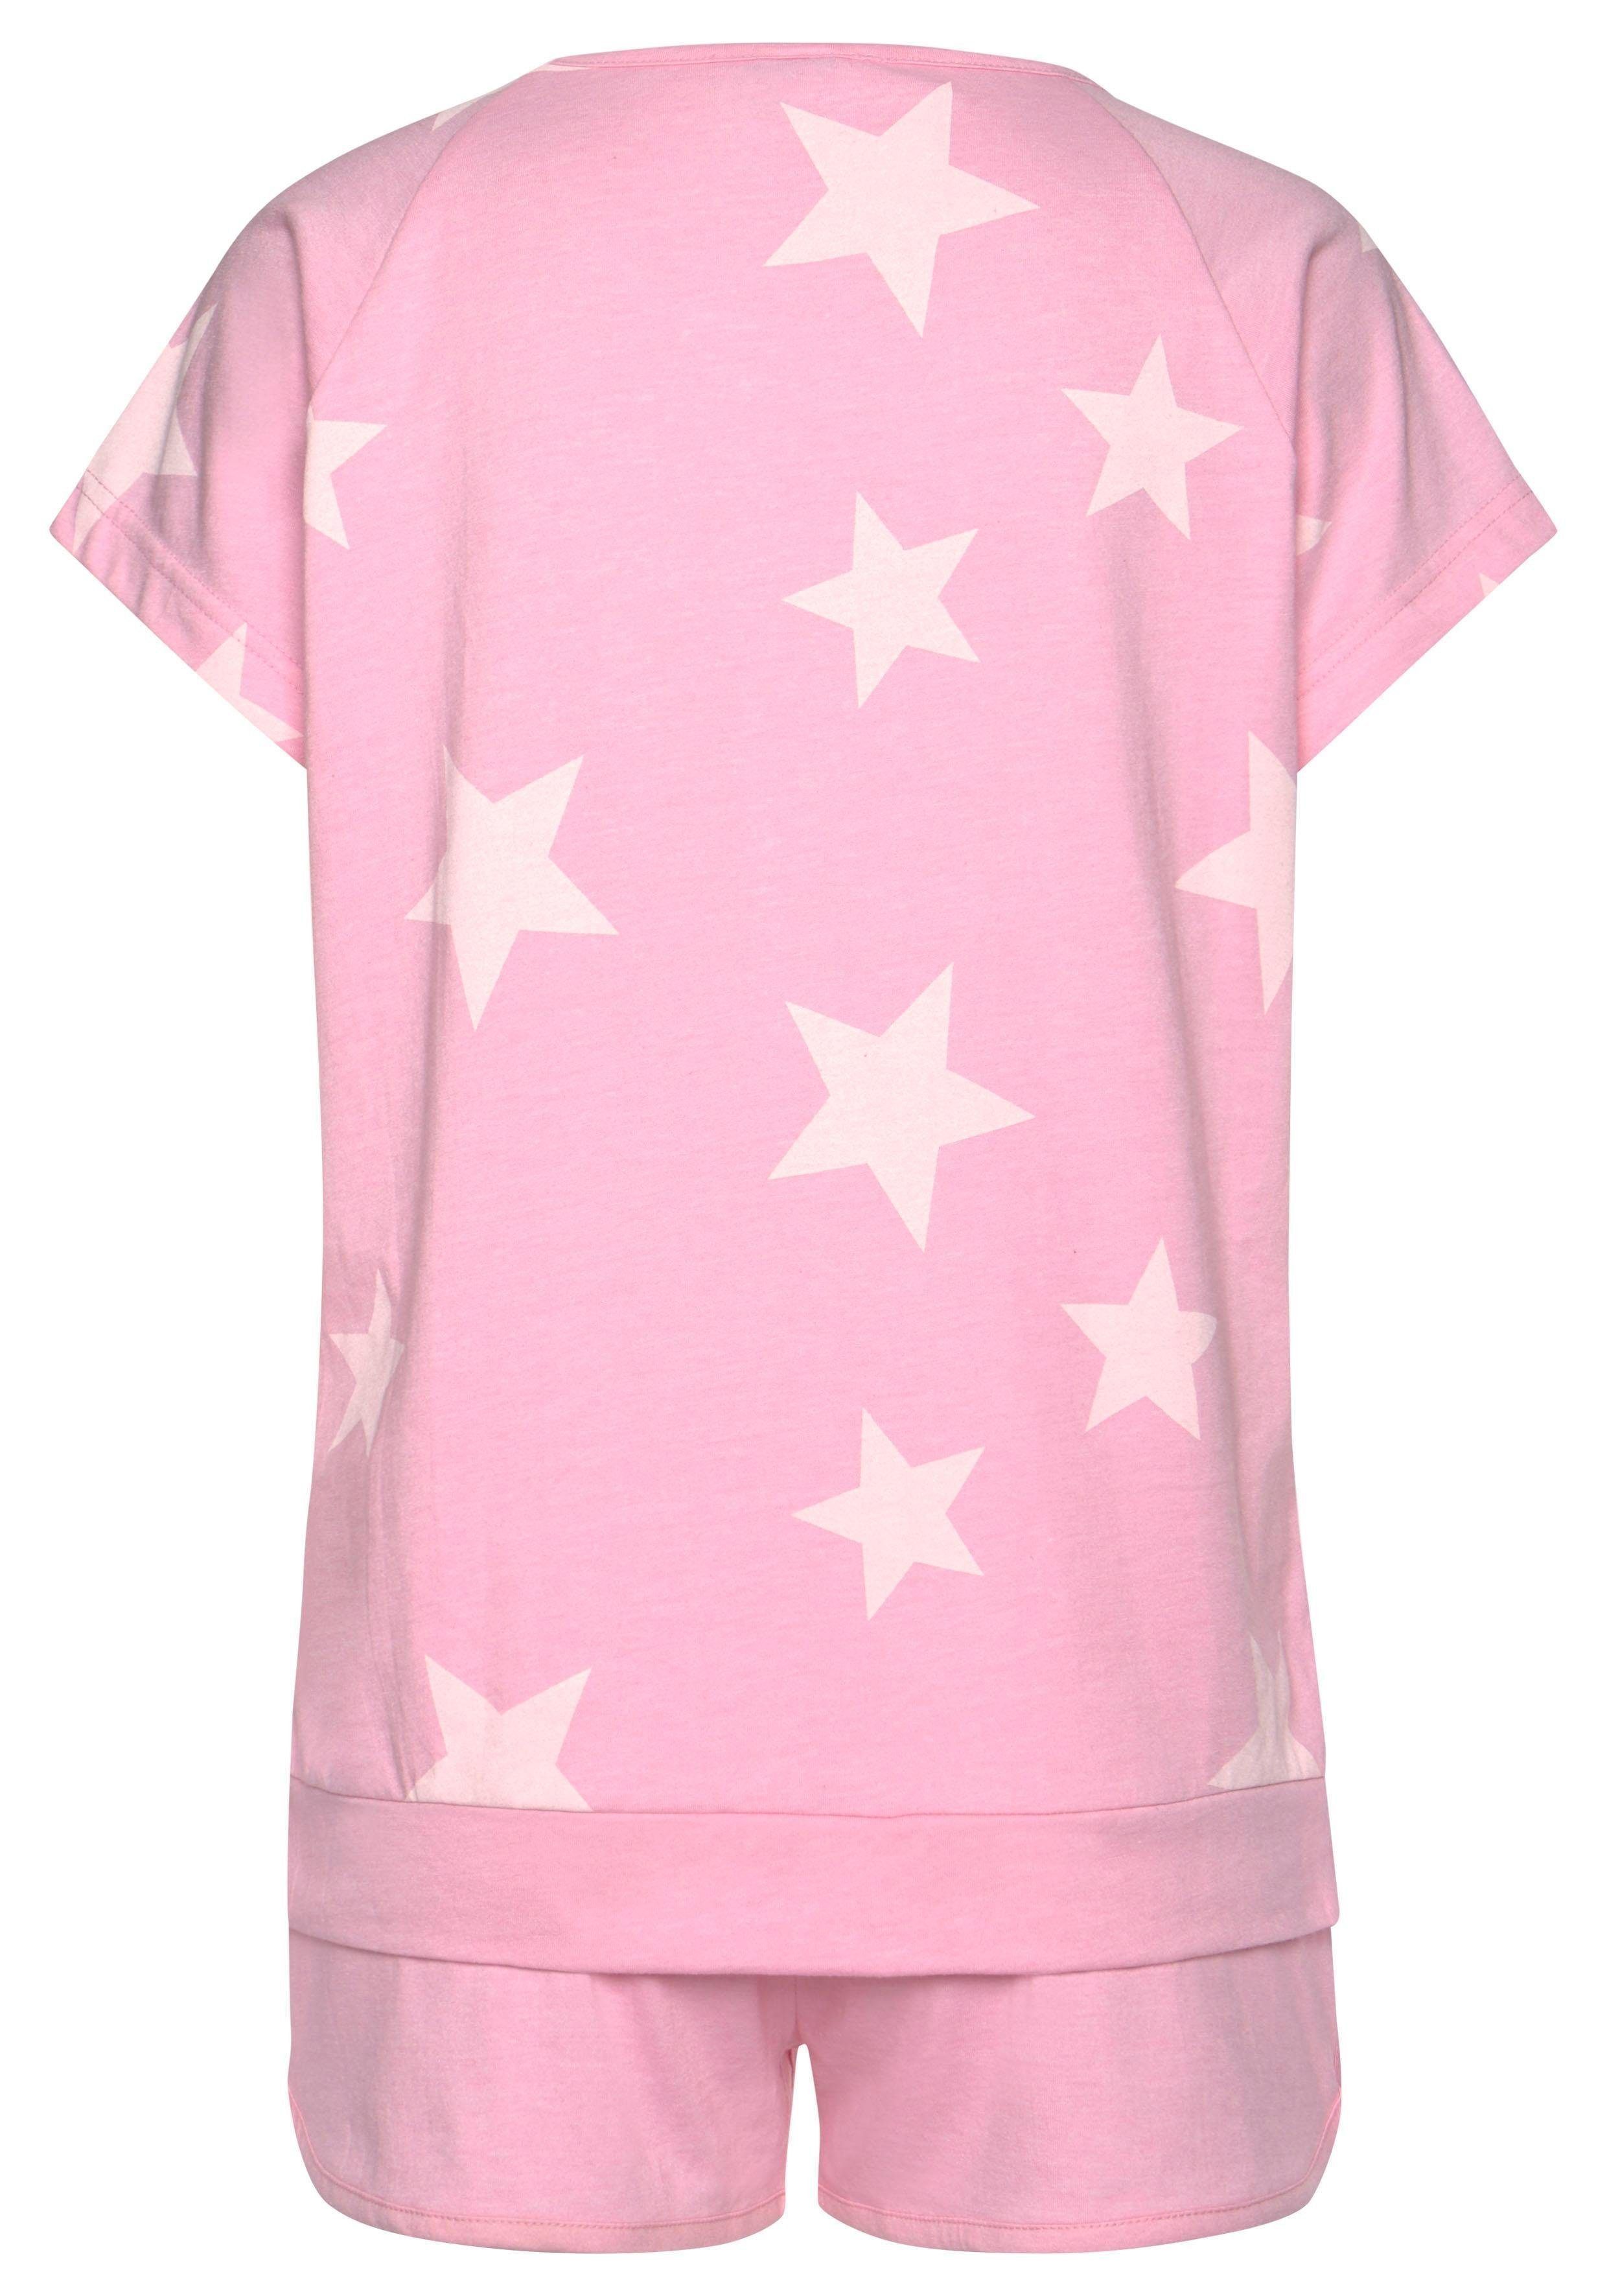 Arizona Stück) (4 Sternen rosa mit Shorty melierter tlg., Optik in grau, 2